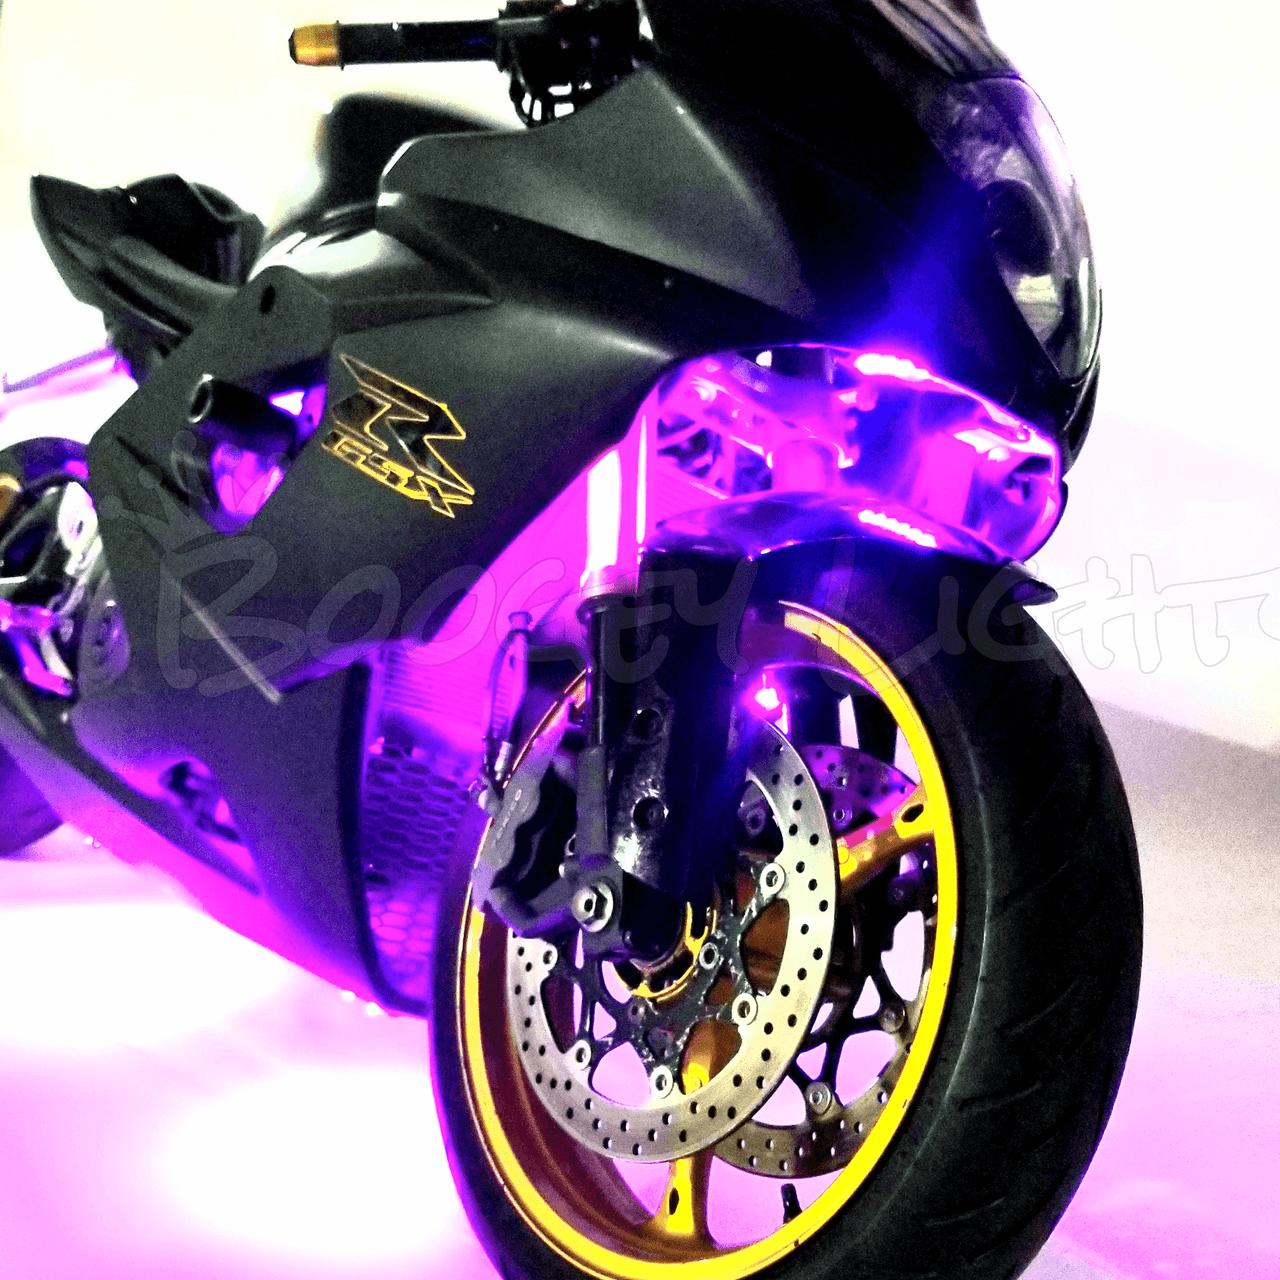 90 LED Motorcycle Engine LED Light Kit with Ground Effects